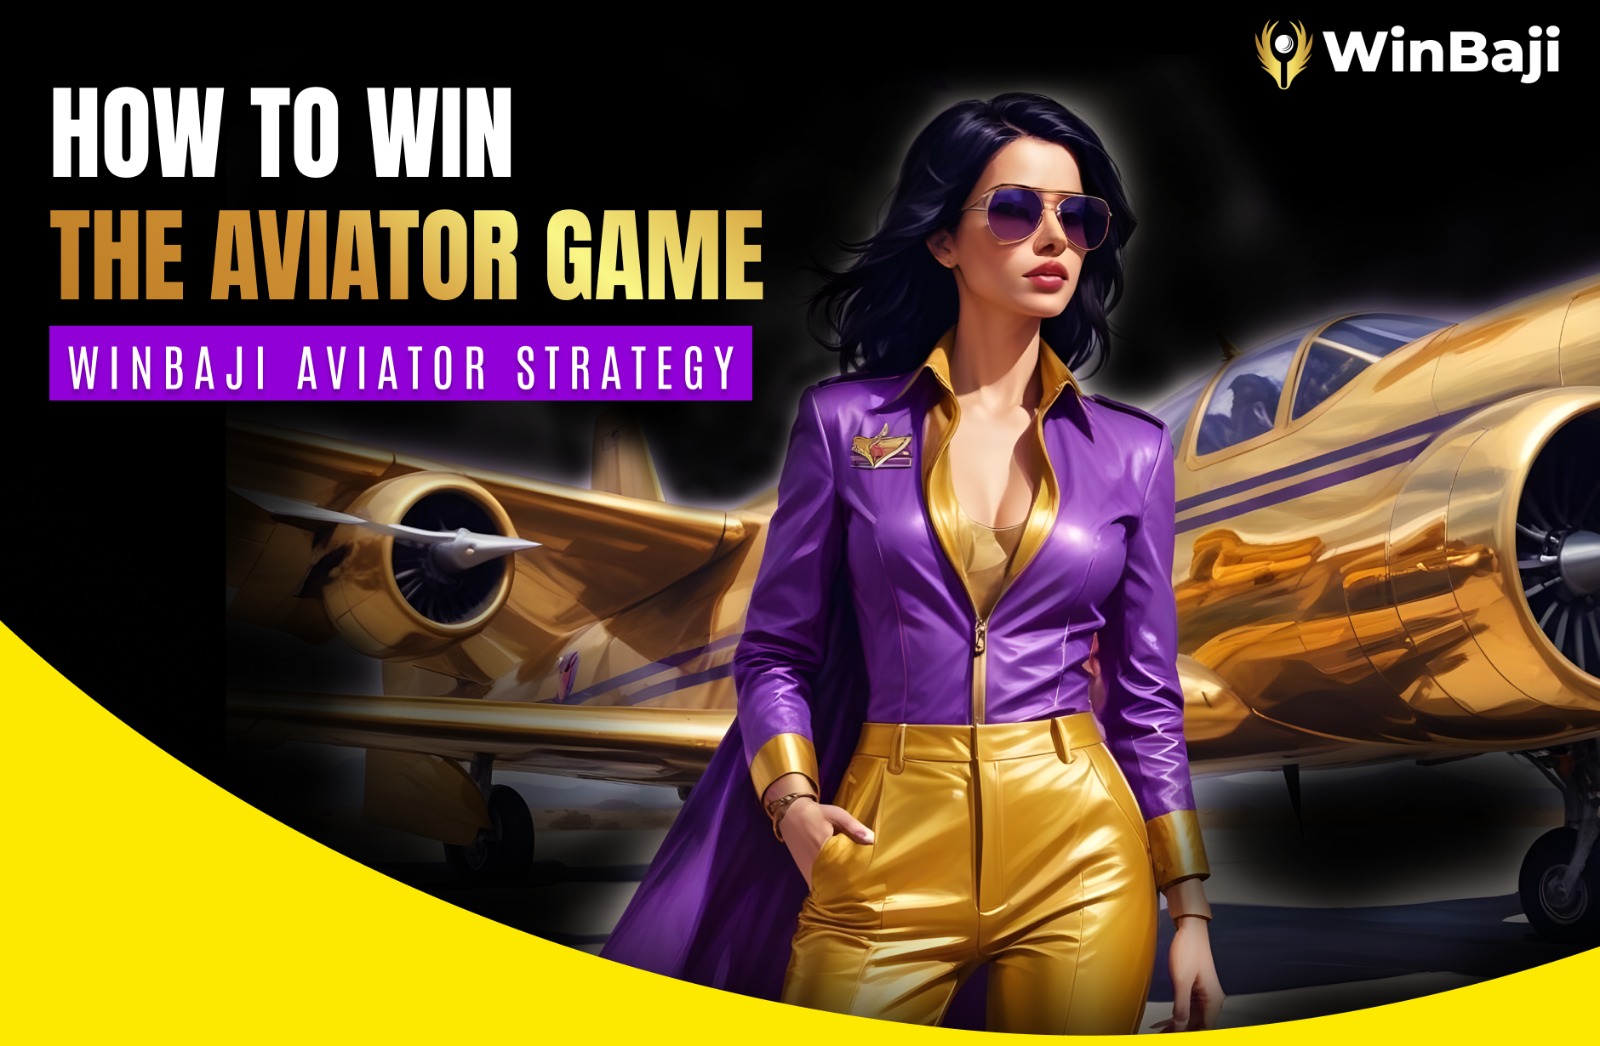 WinBaji Aviator Strategy: How to Win the Aviator Game